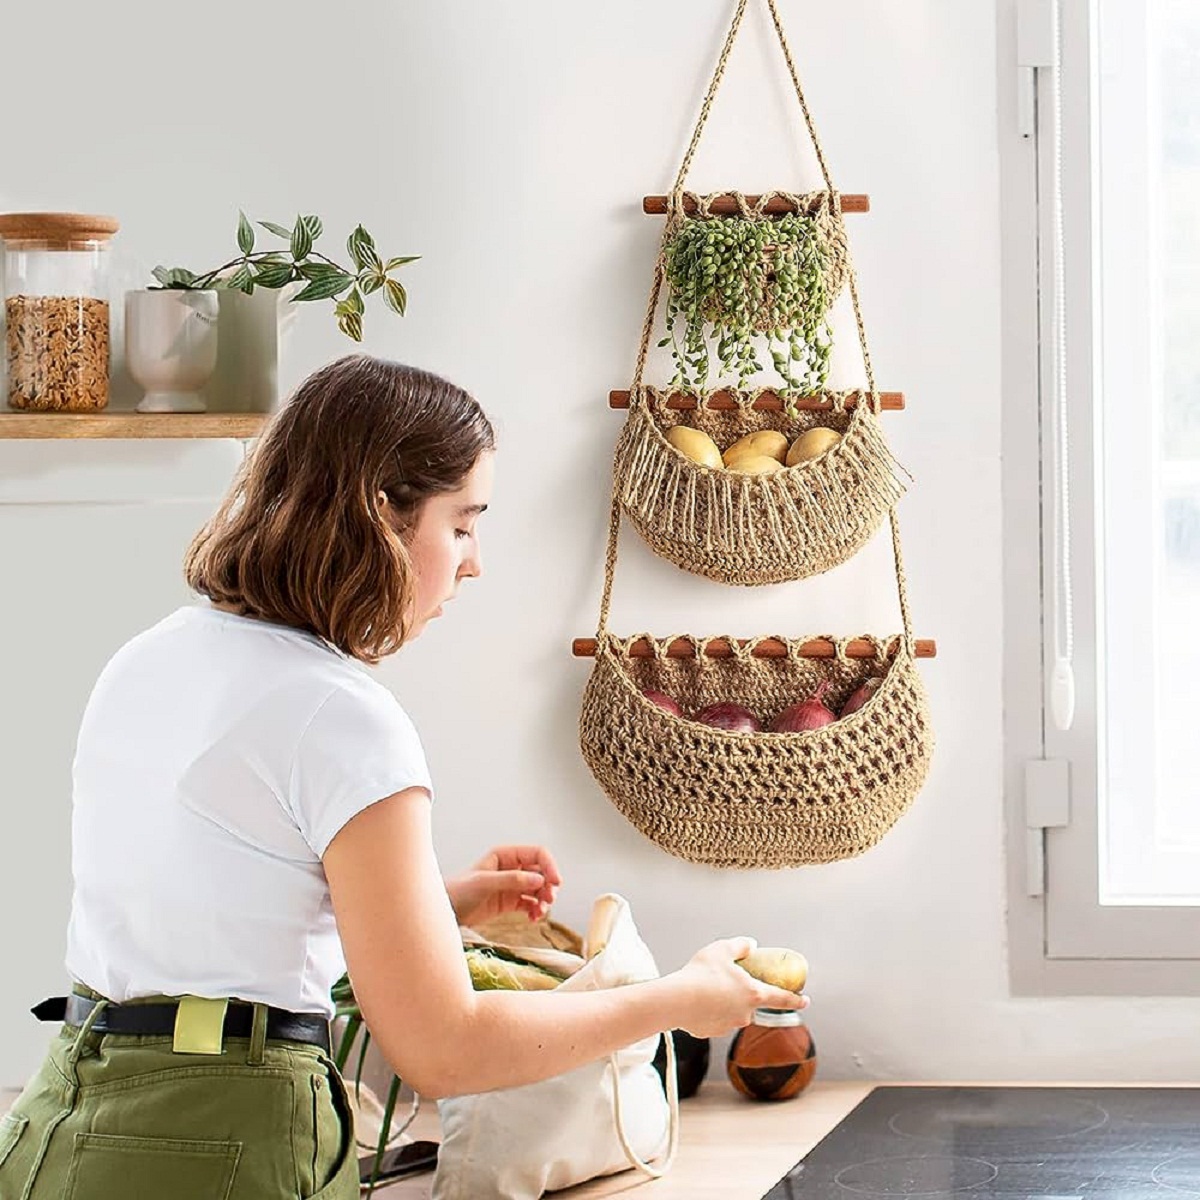 9 Superior Hanging Baskets For Kitchen for 2023